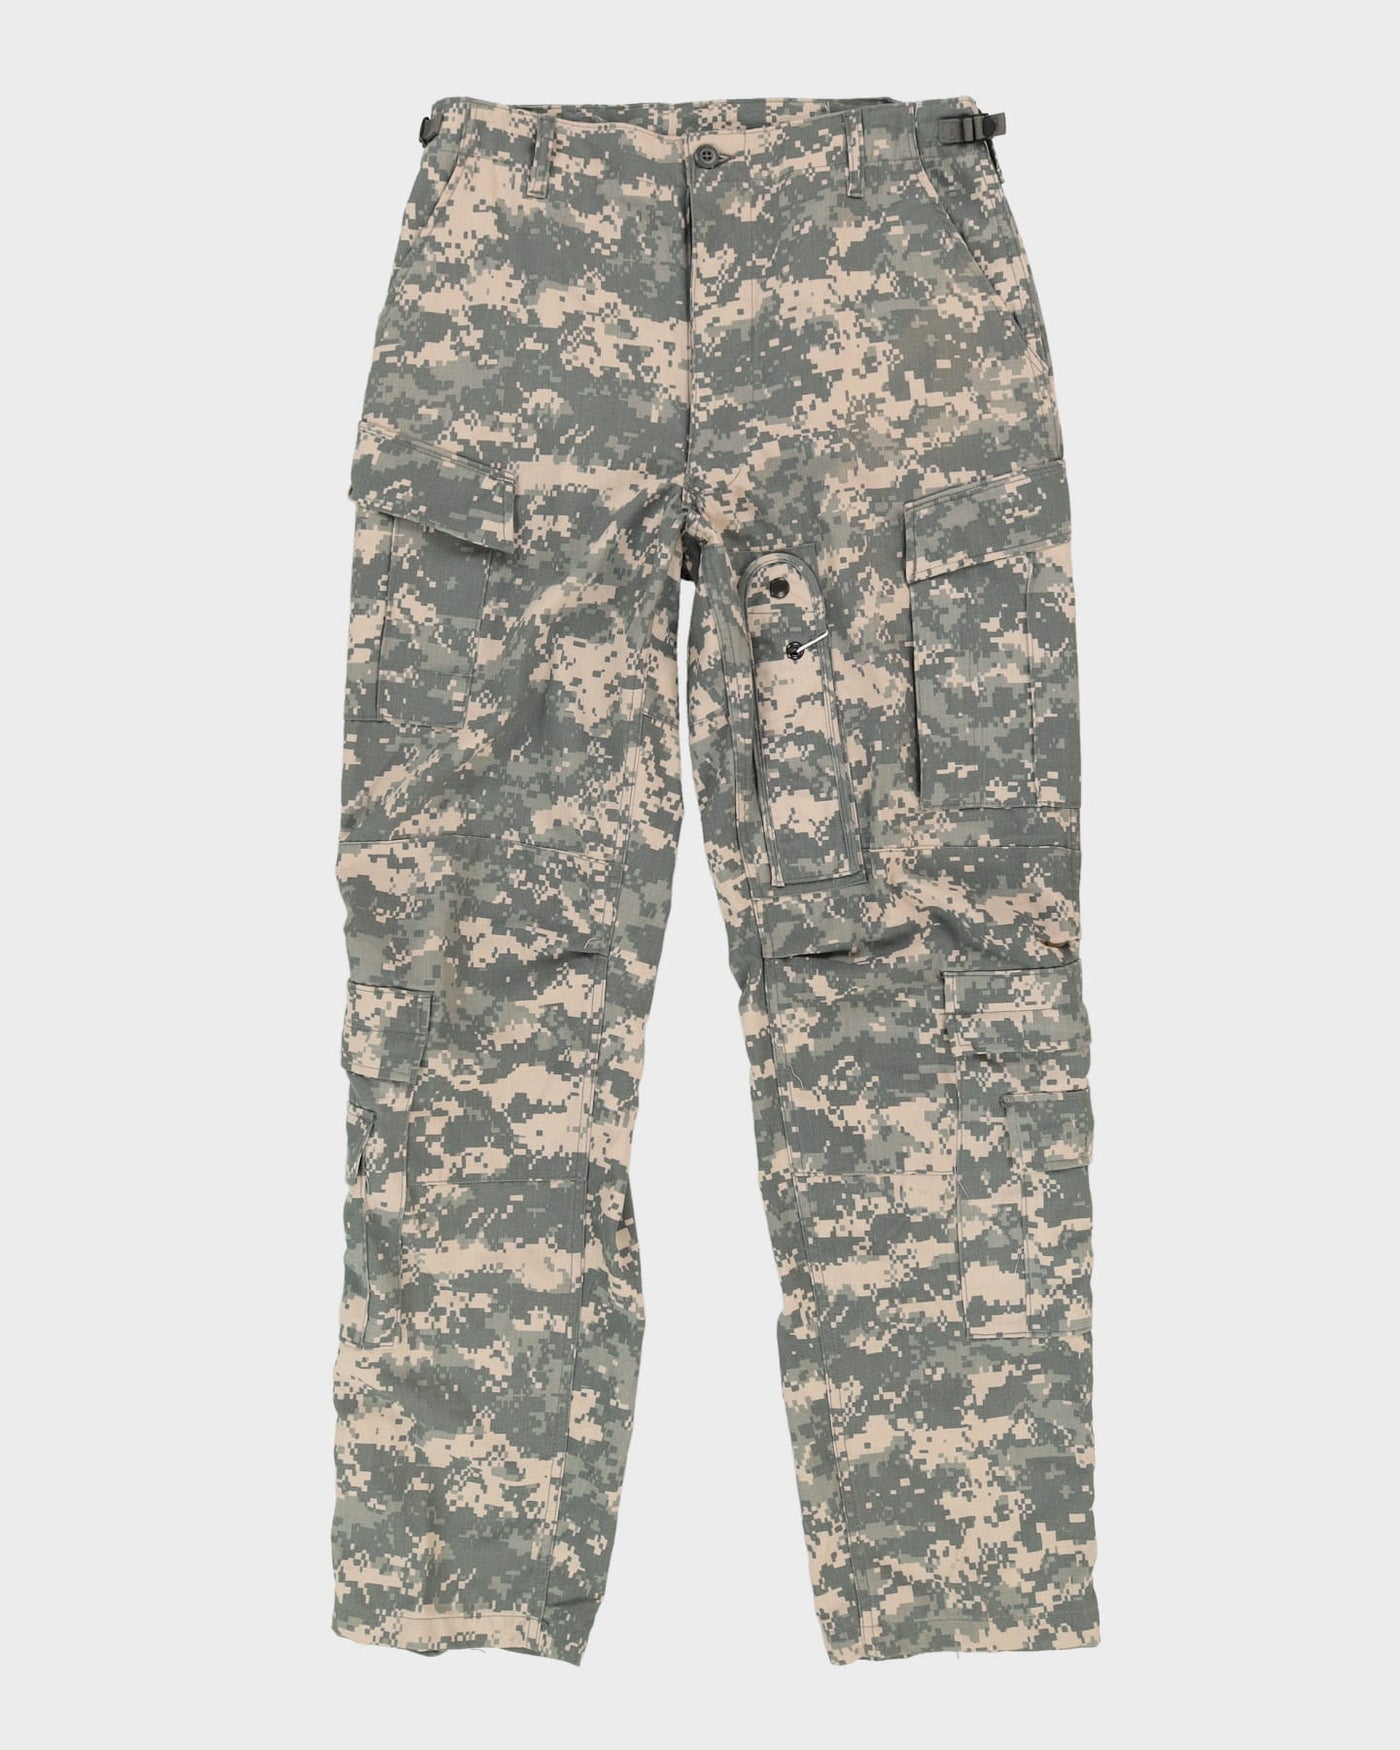 2010s US Army Aircrew Digital Camo ACU Trousers - 32x34